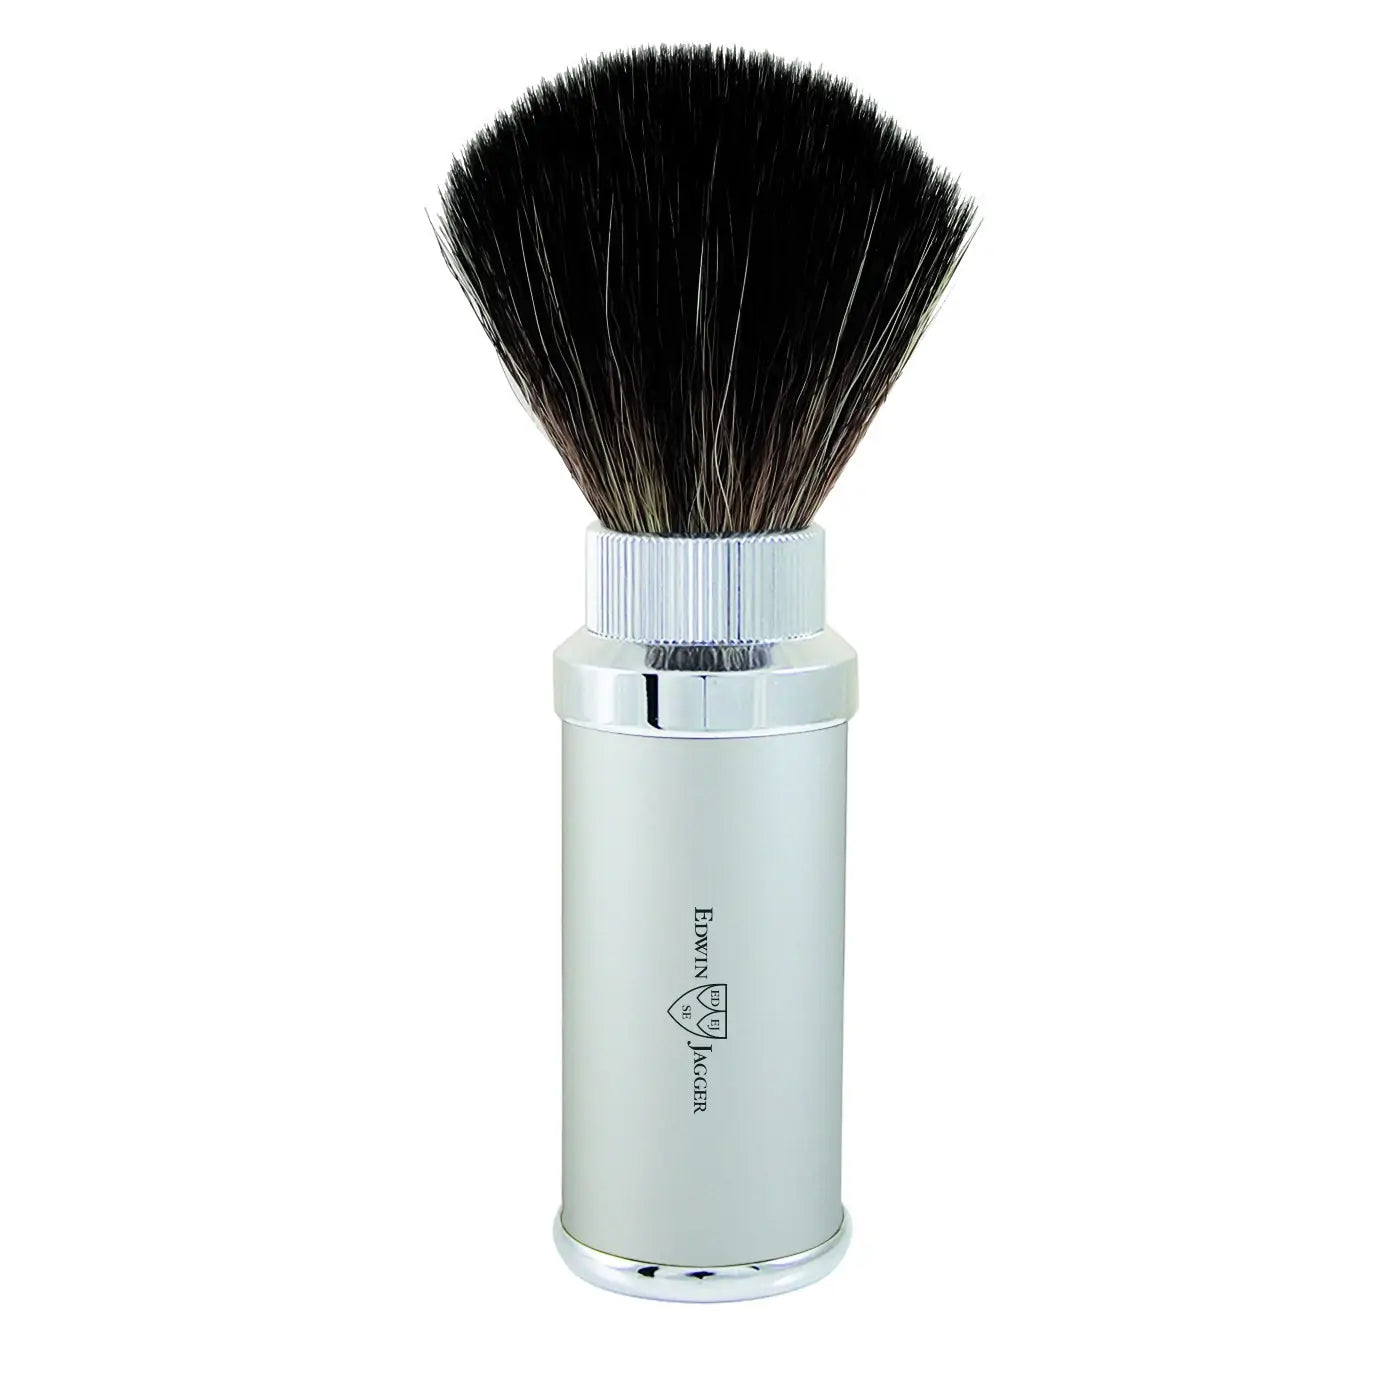 Edwin Jagger Chrome Plated Silver Travel Shaving Brush (Black Synthetic), 21M5290CR